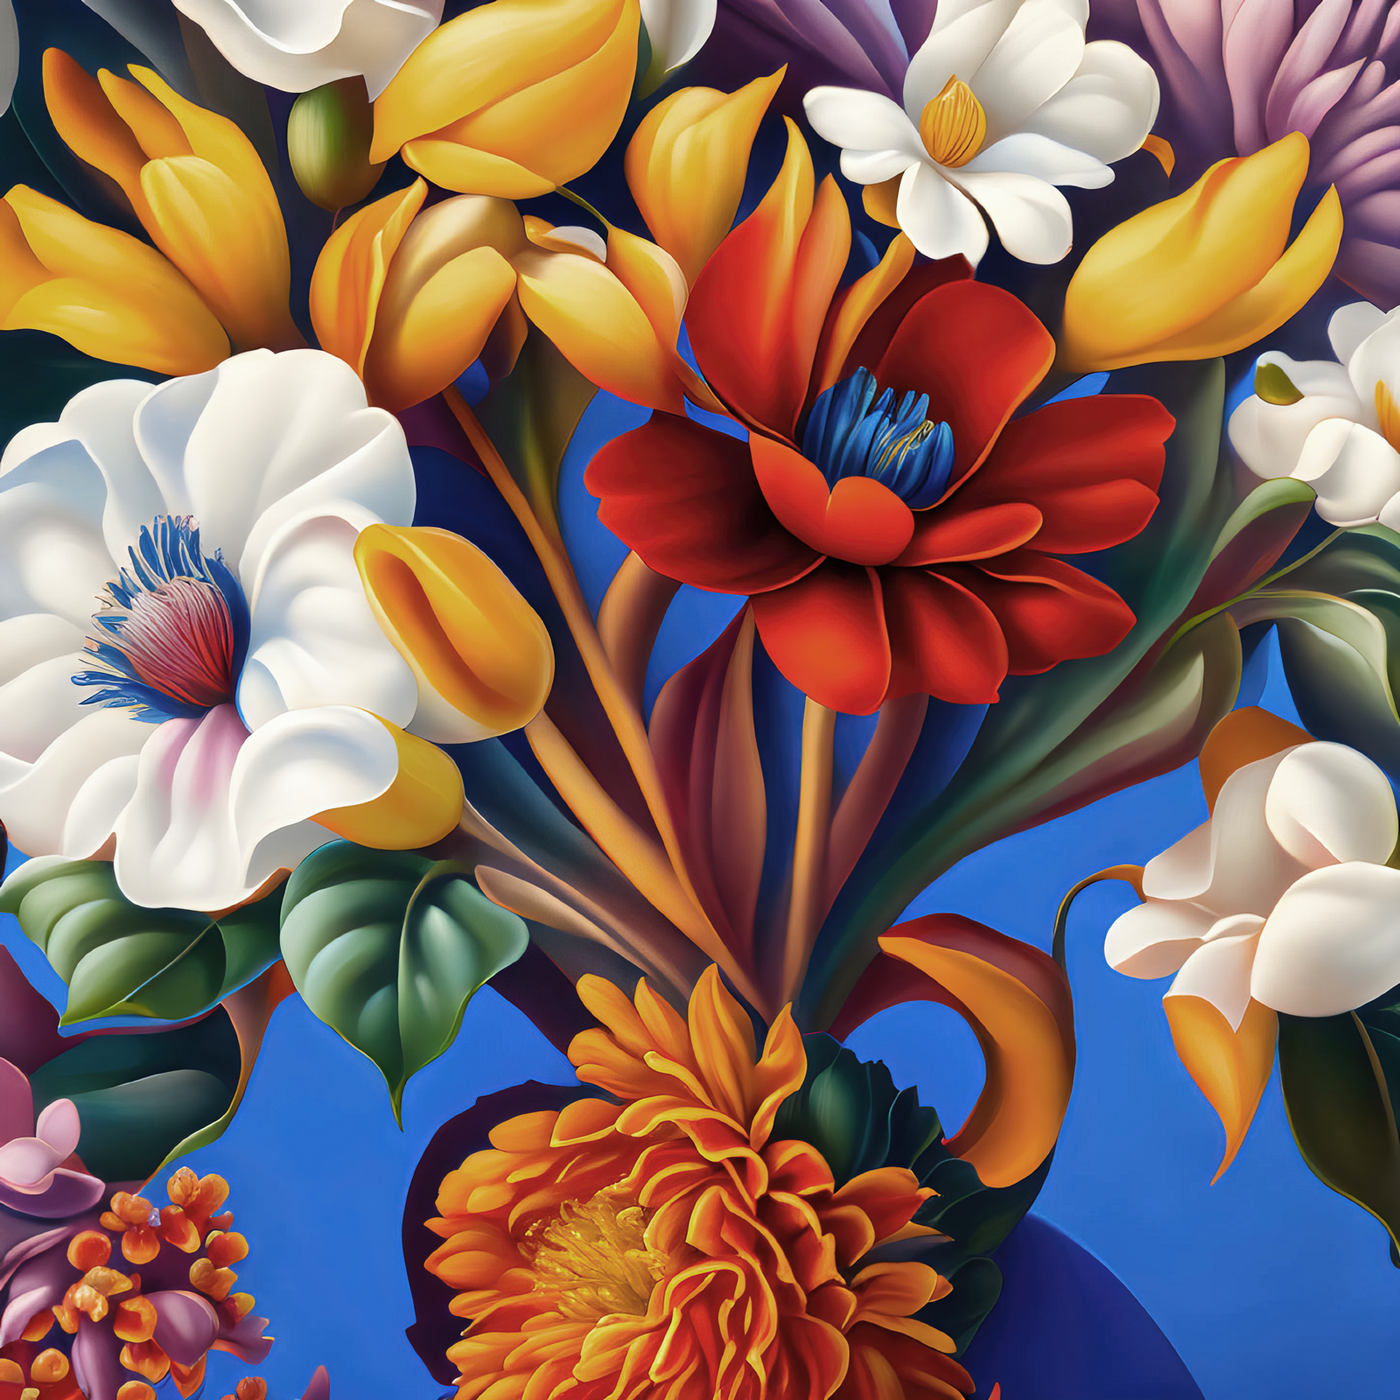 Art Deco Floral Bouquet - Gallery Wrapped Canvas